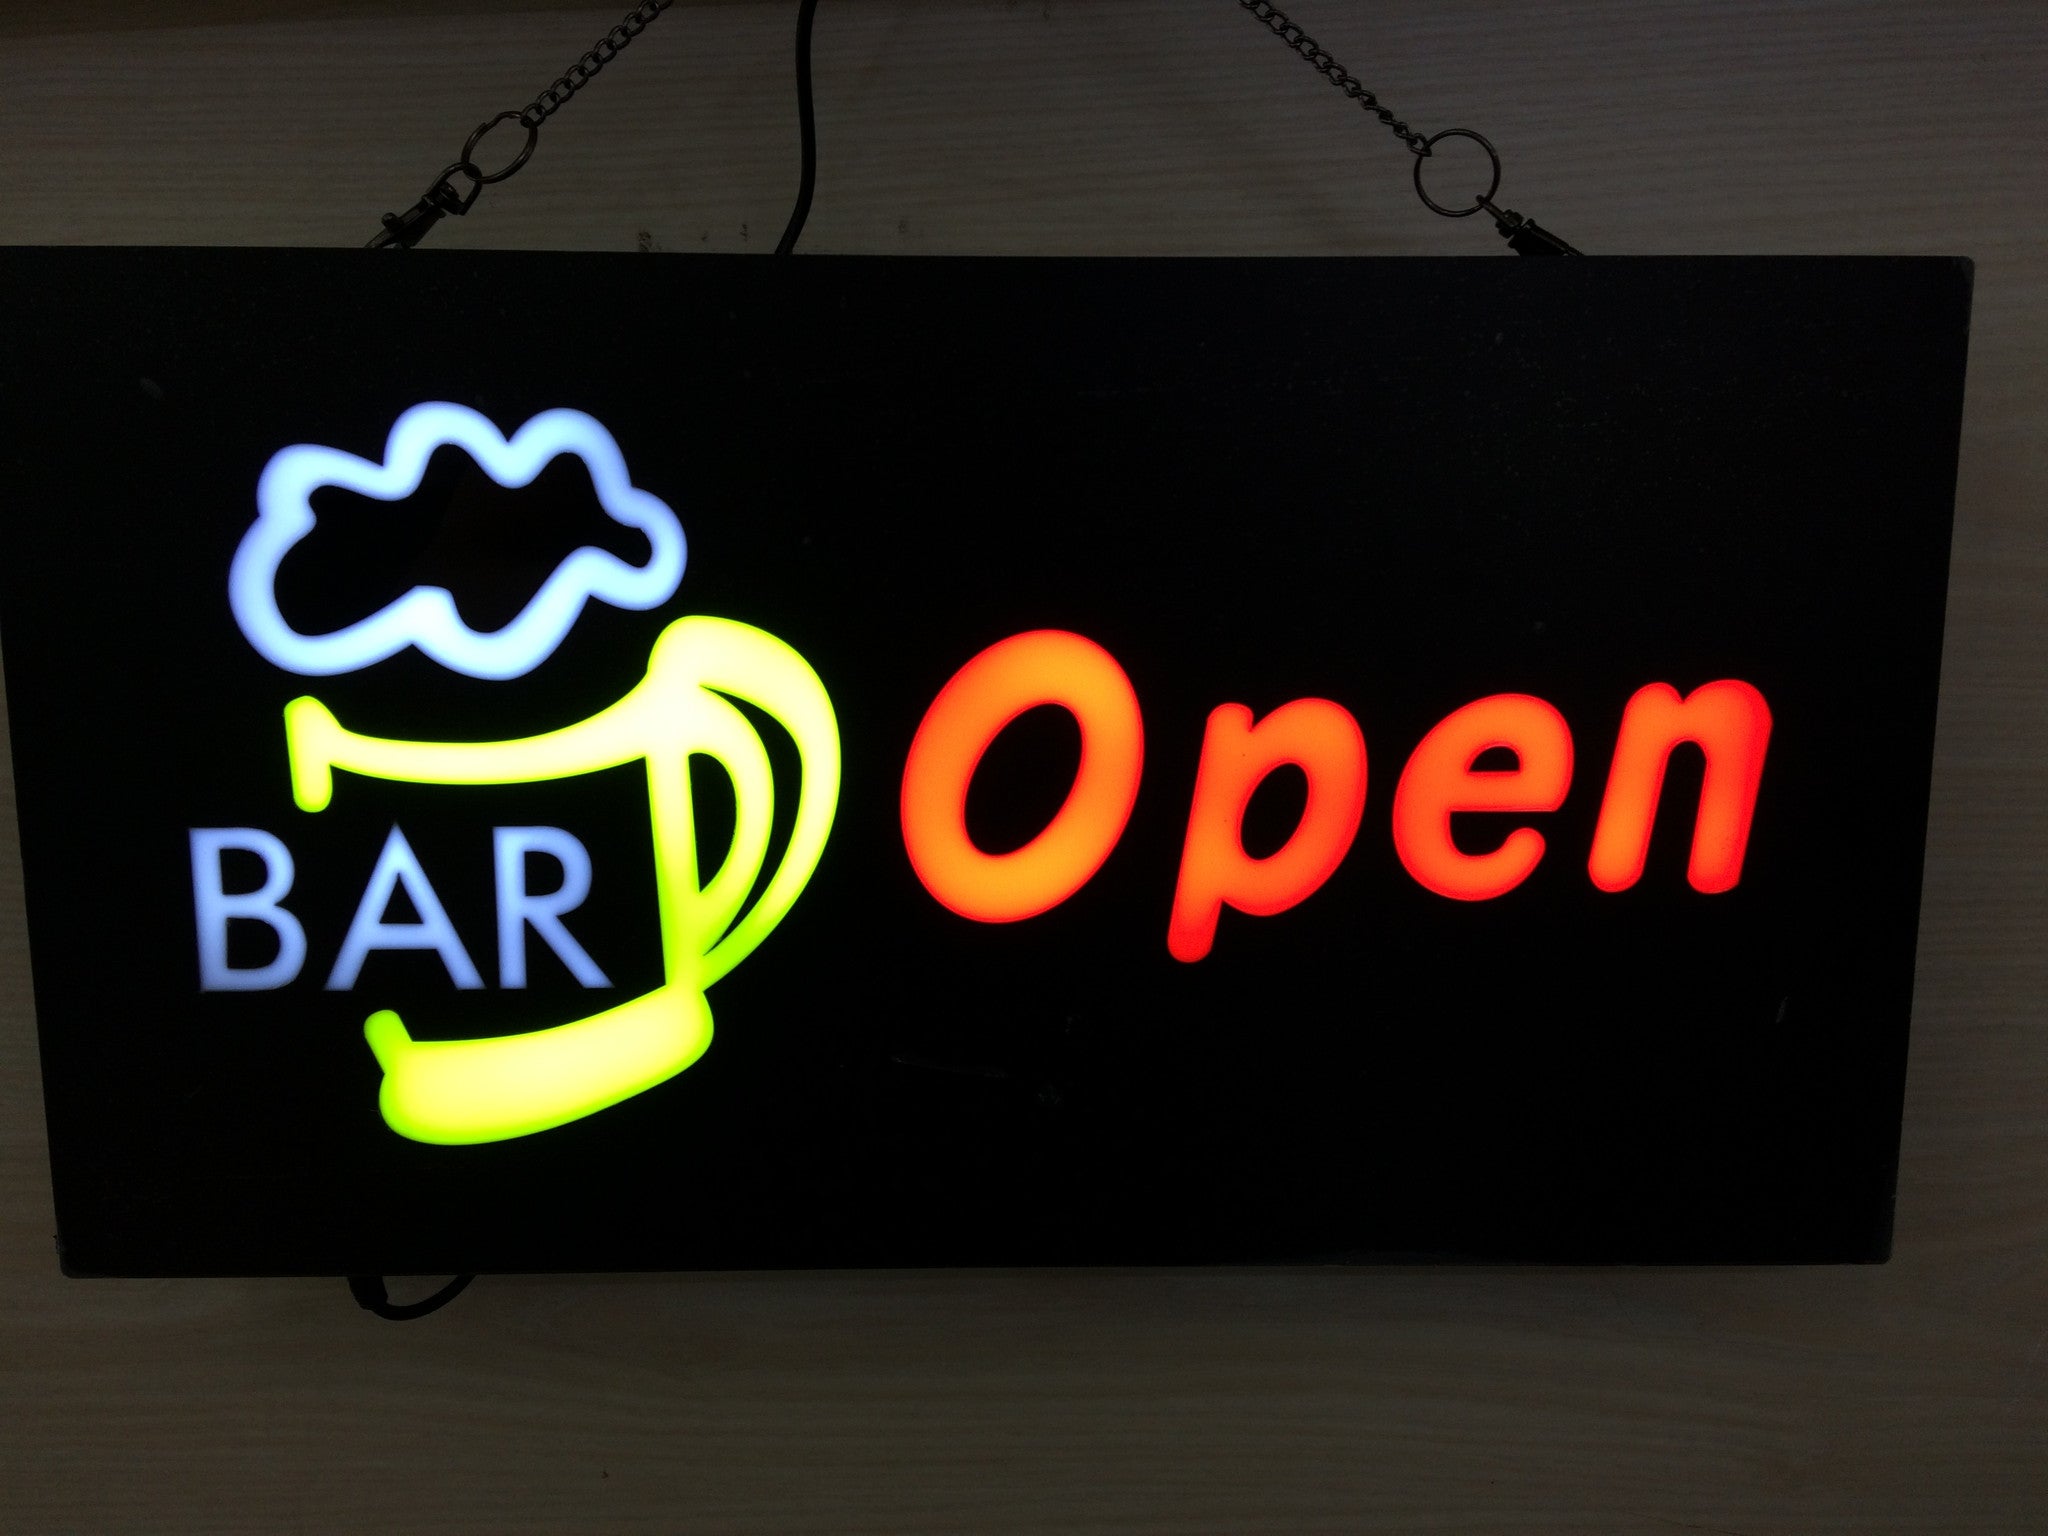 "BAR OPEN" BEER MUG Bright Neon Sign